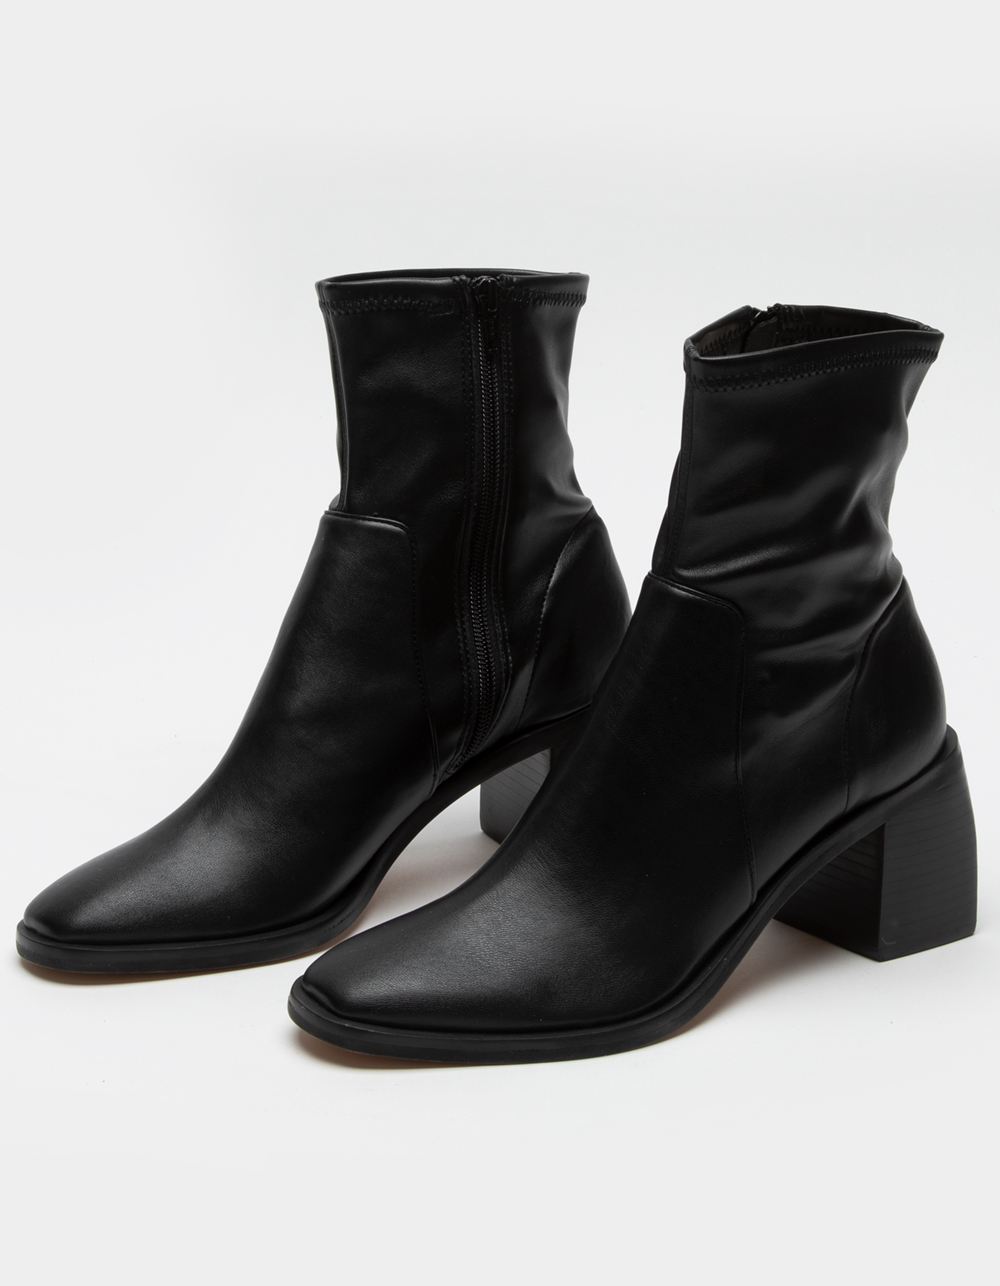 DOLCE VITA Indiga Boots - BLACK - 410875100